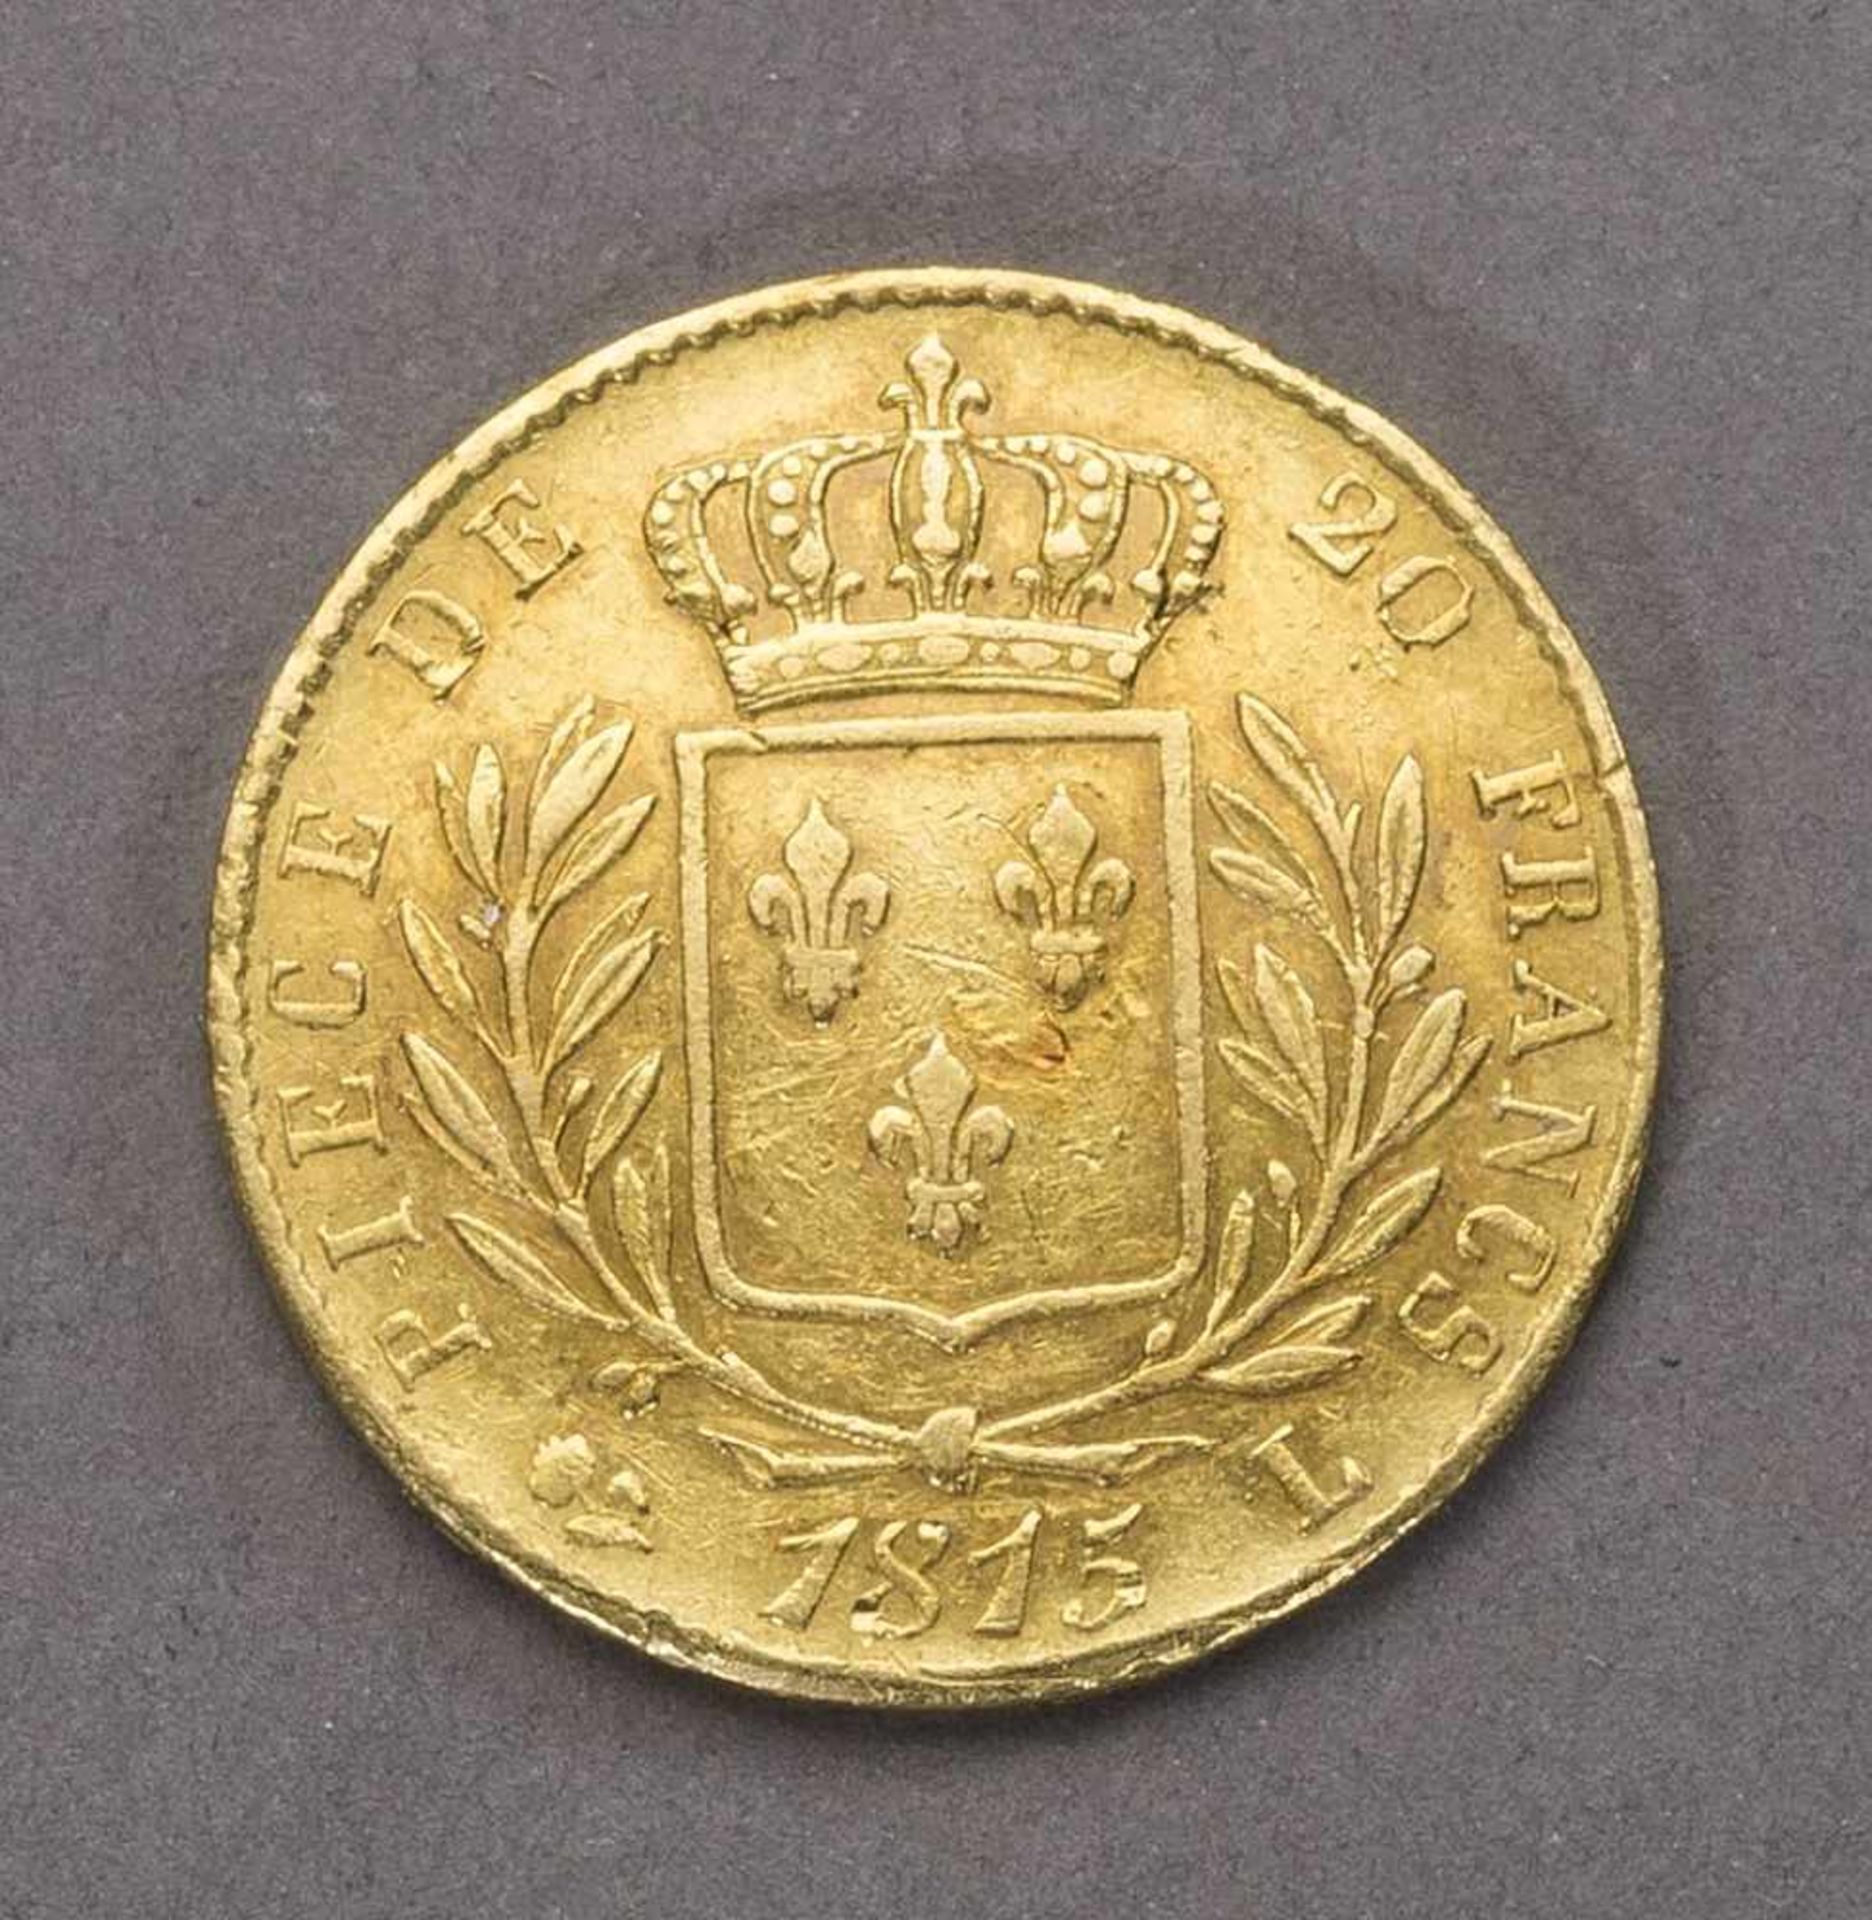 Frankreich. 20 Francs Gold 1815. - Bild 2 aus 2